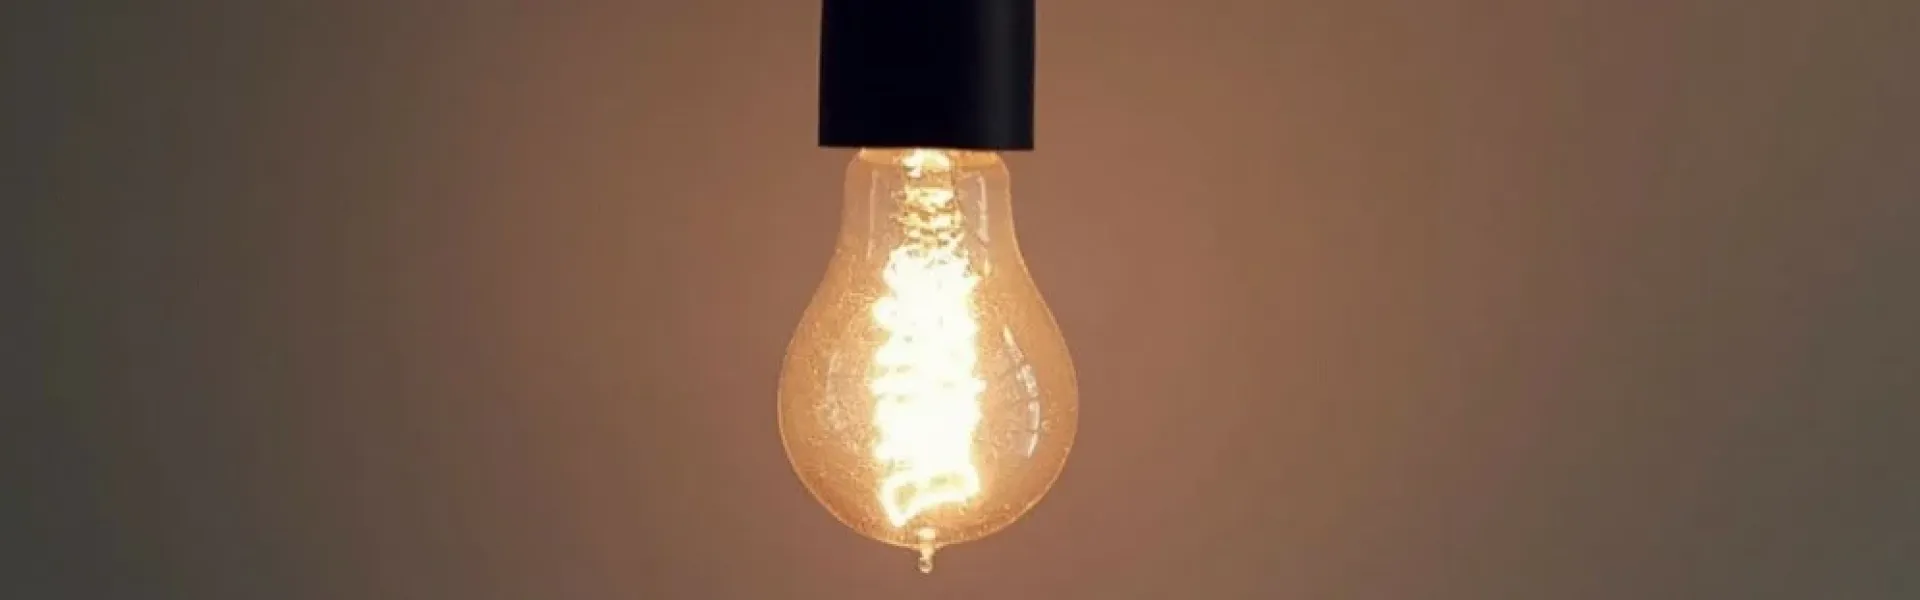 A lit light bulb